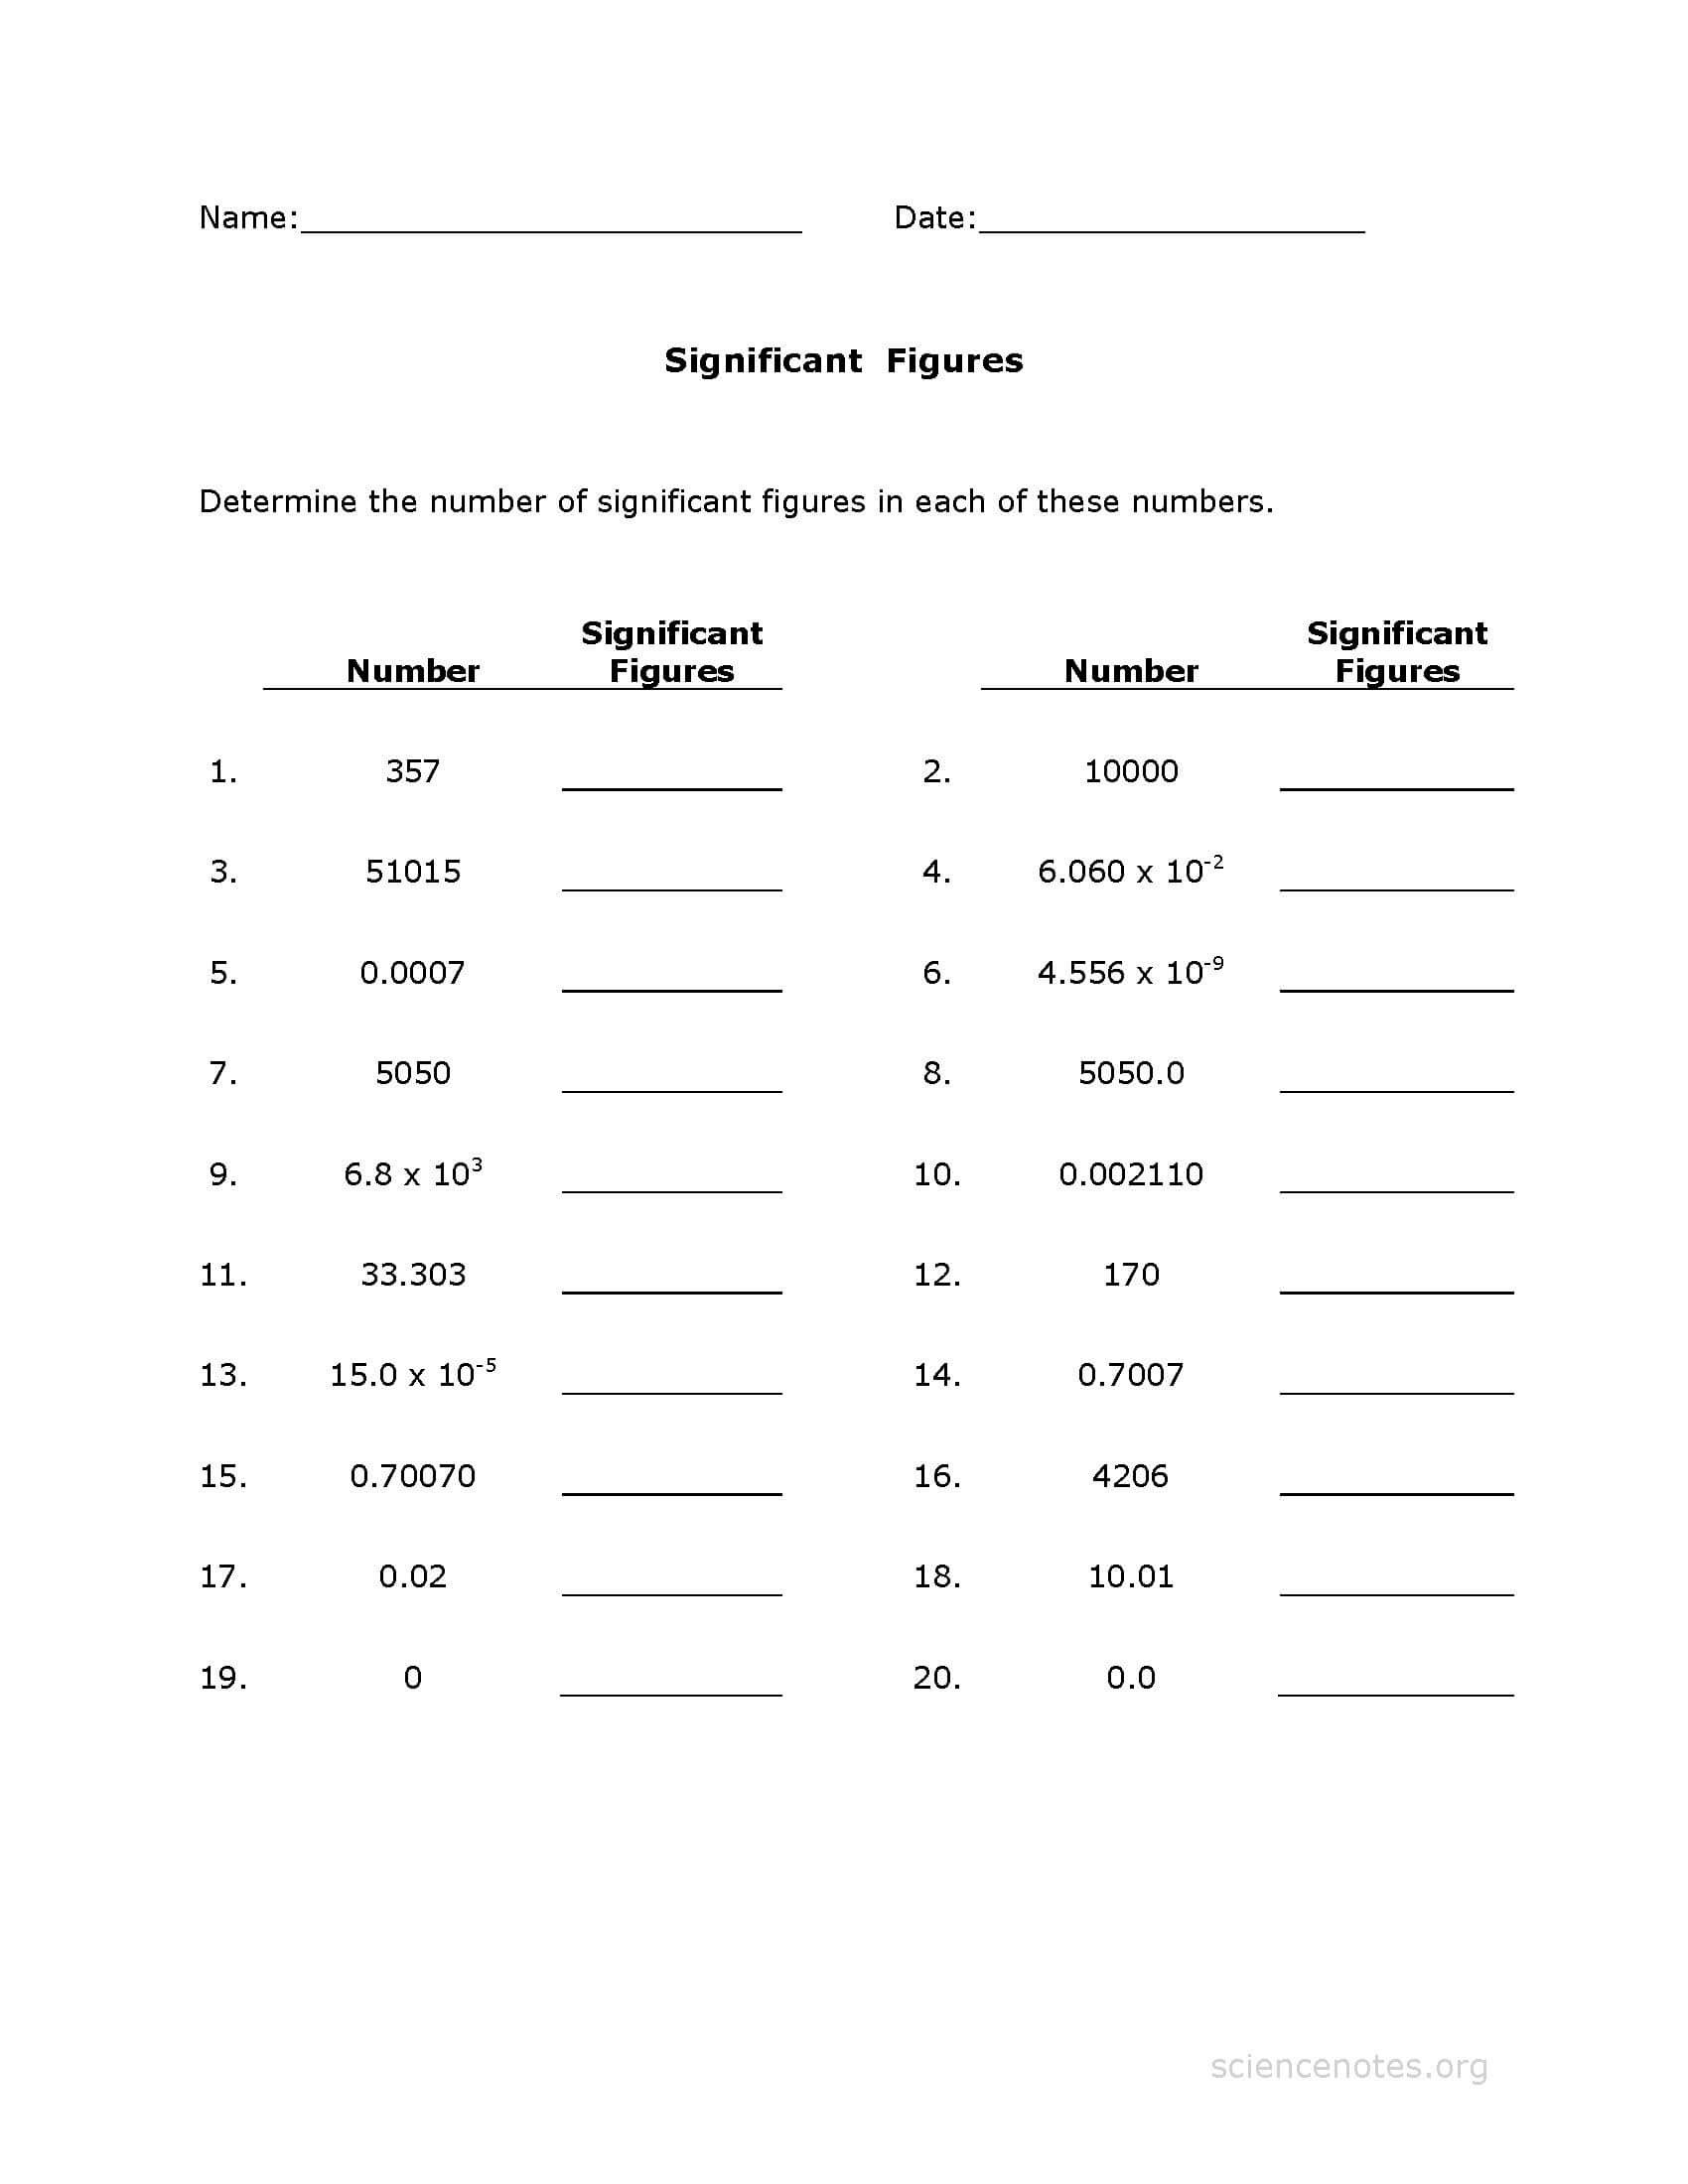 Significant Figures Worksheet Regarding Significant Figures Worksheet Chemistry